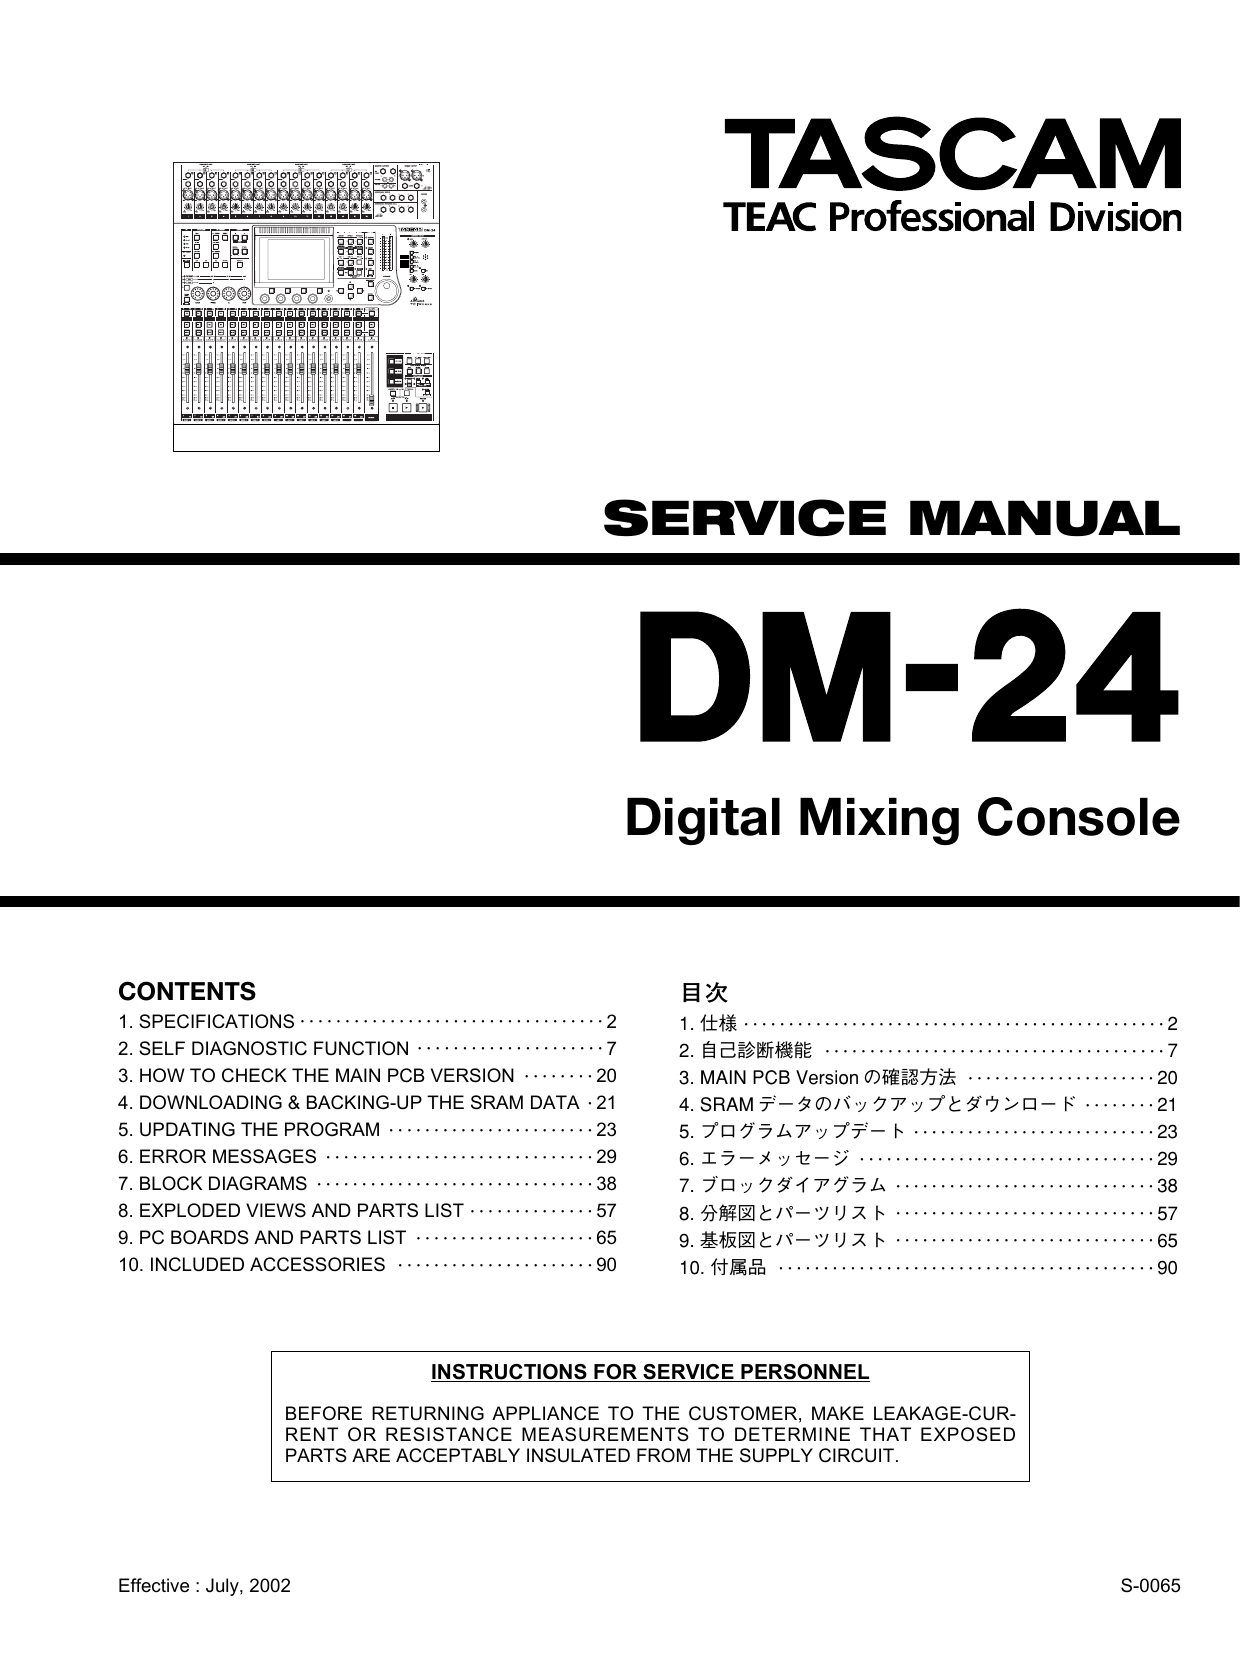 Tascam DM-24 Service manual | Manualzz